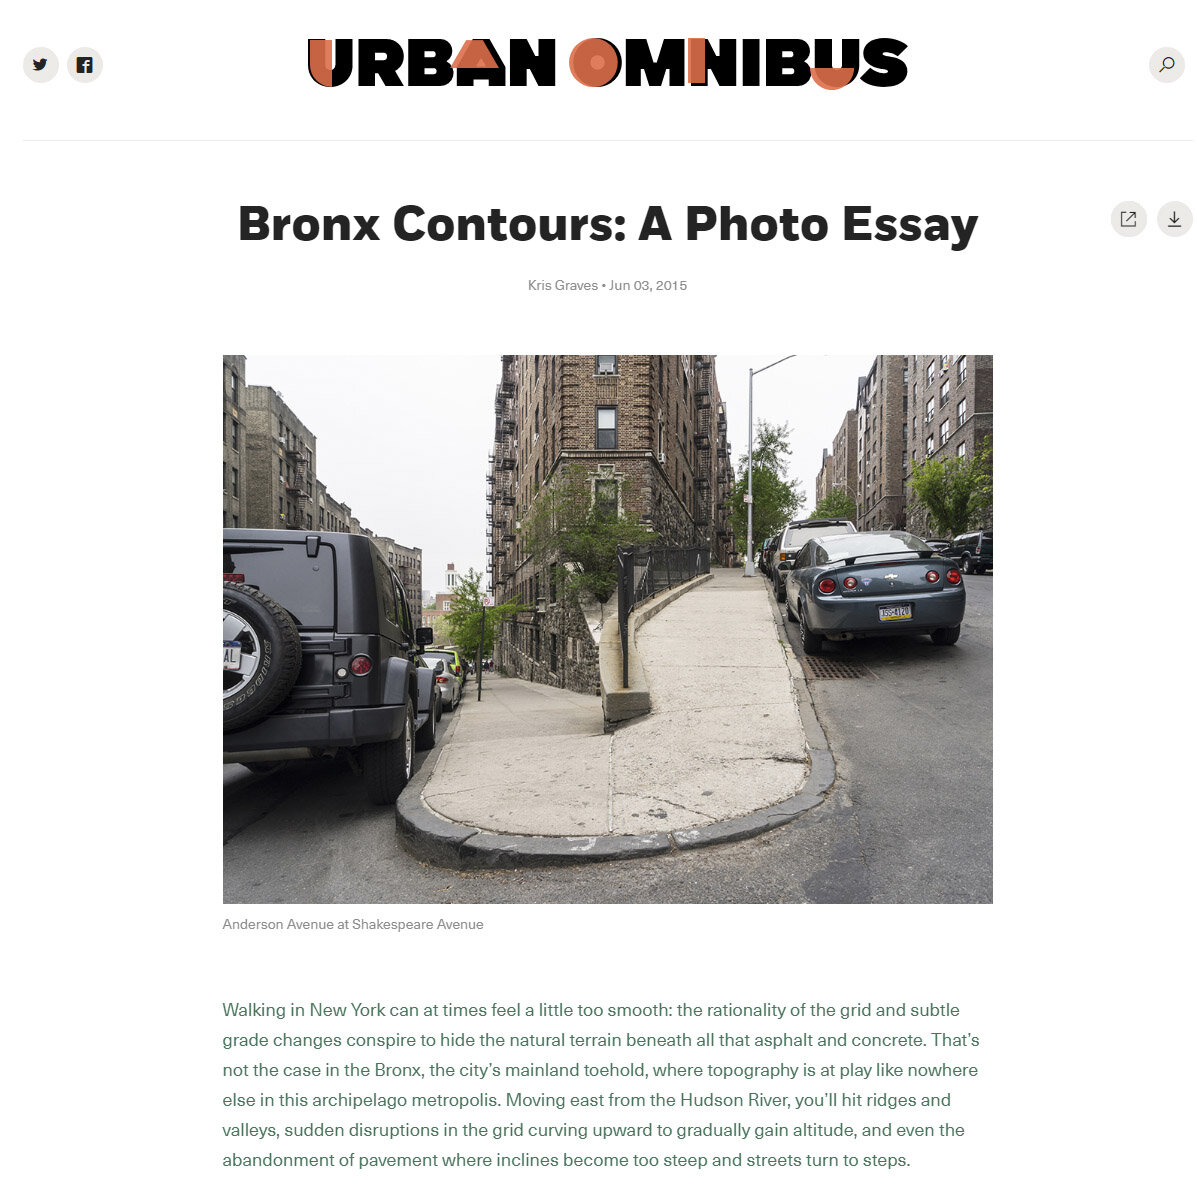   Bronx Contours (link)  